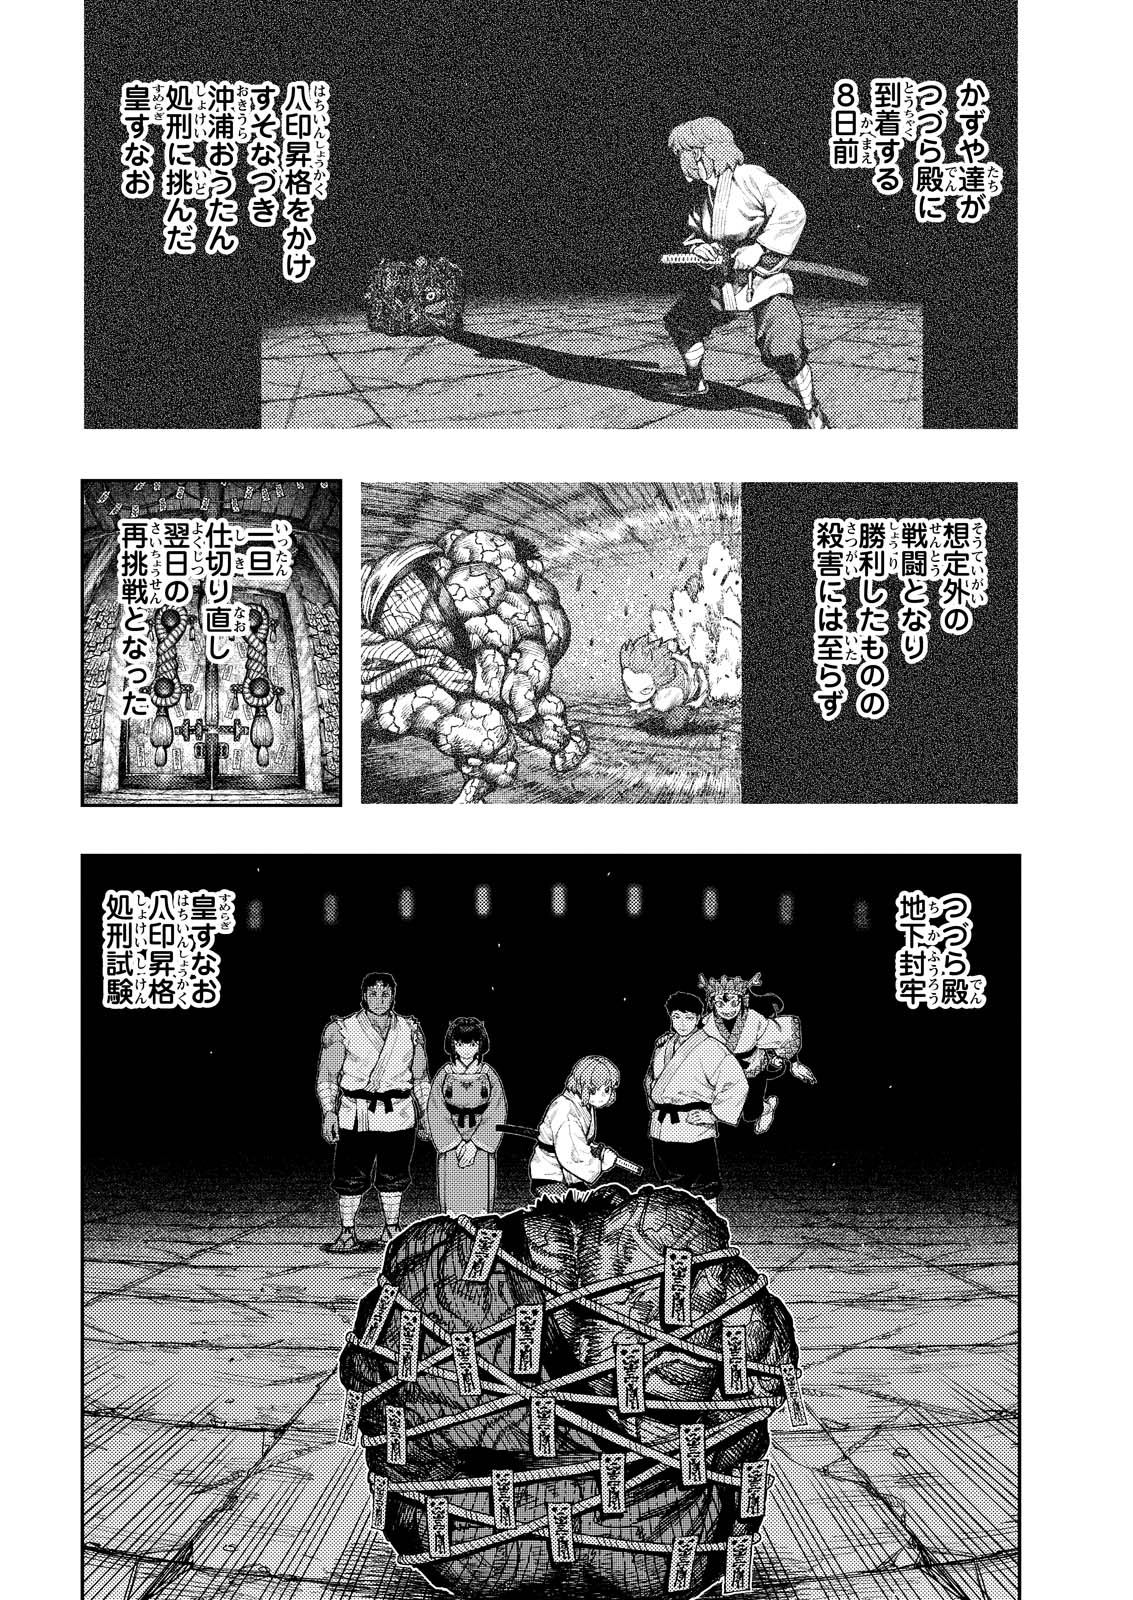 Tsugumomo - Chapter 167 - Page 2